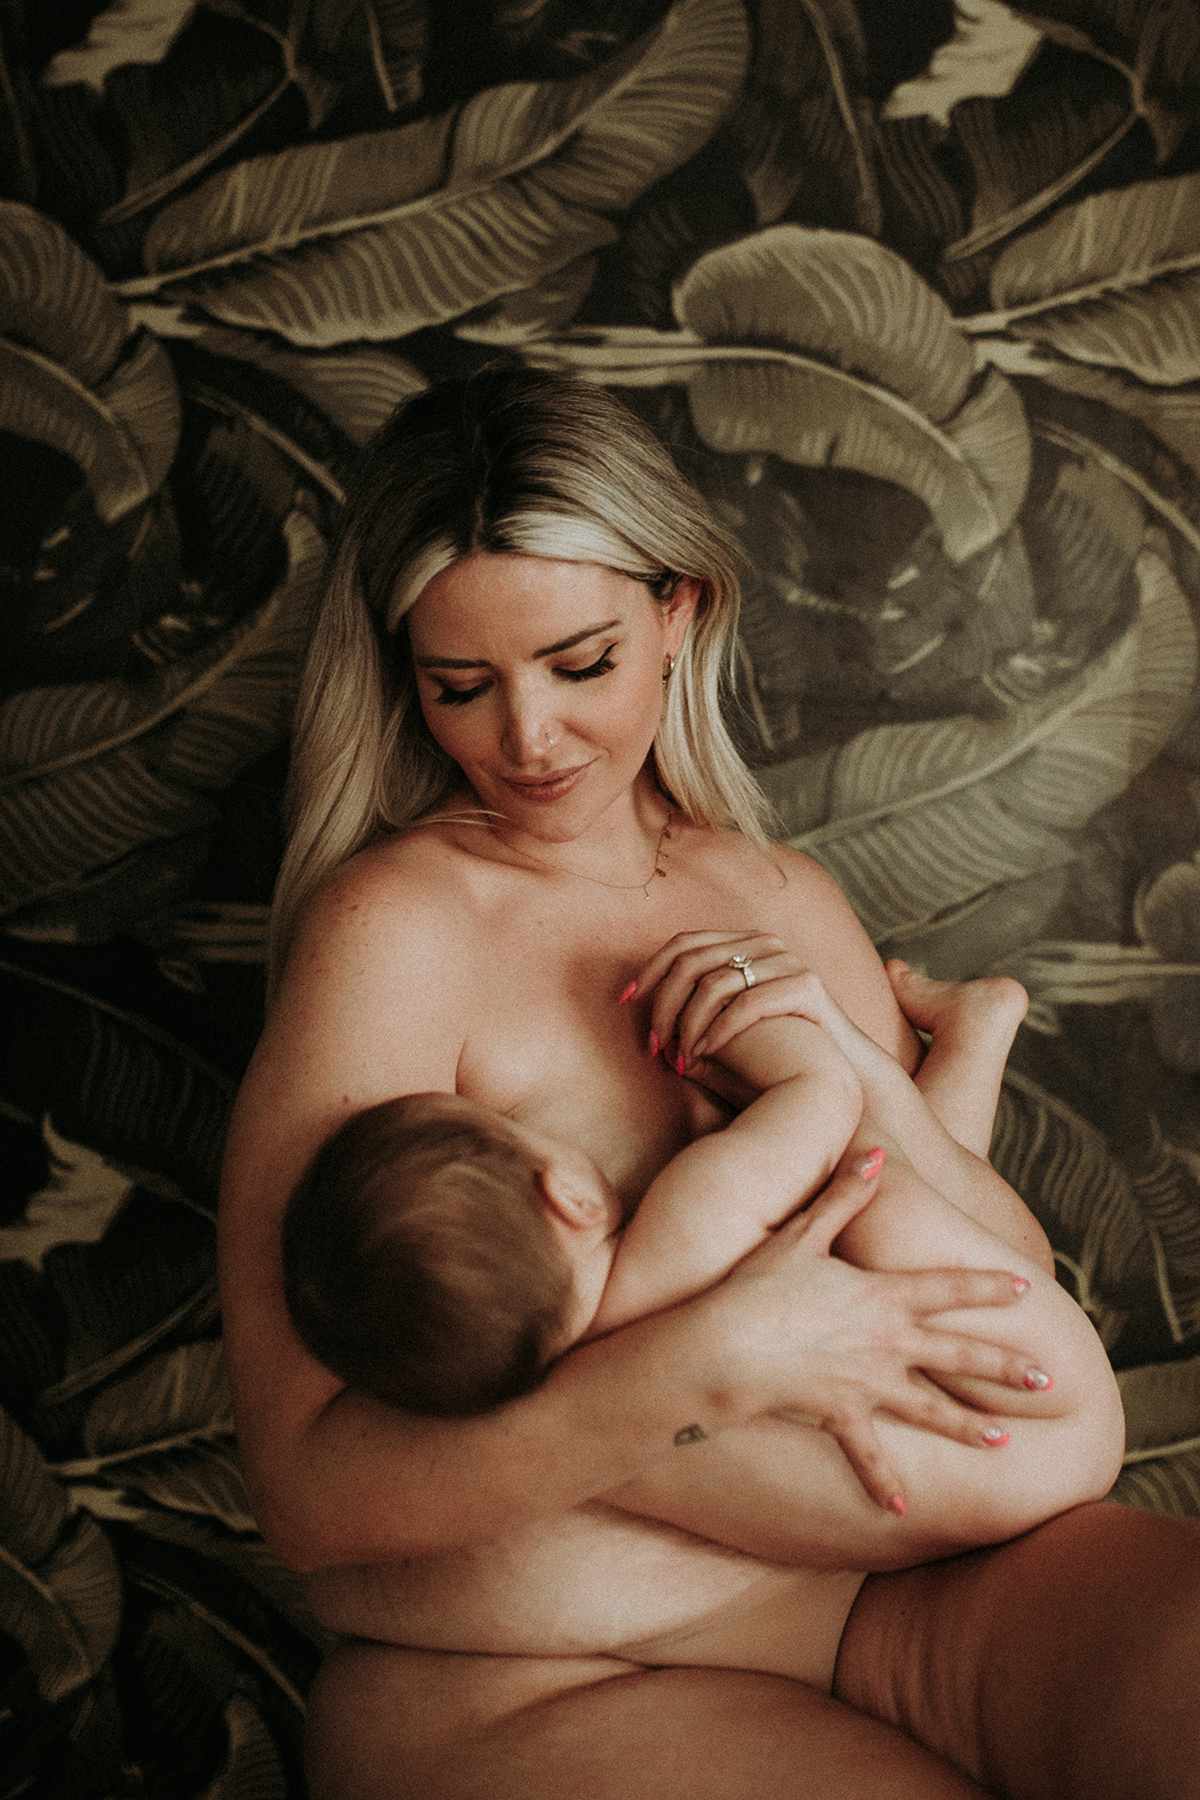 Sarah Nicole Landry a.k.a The Bird's Papaya gazes down lovingly at her baby girl while nursing her